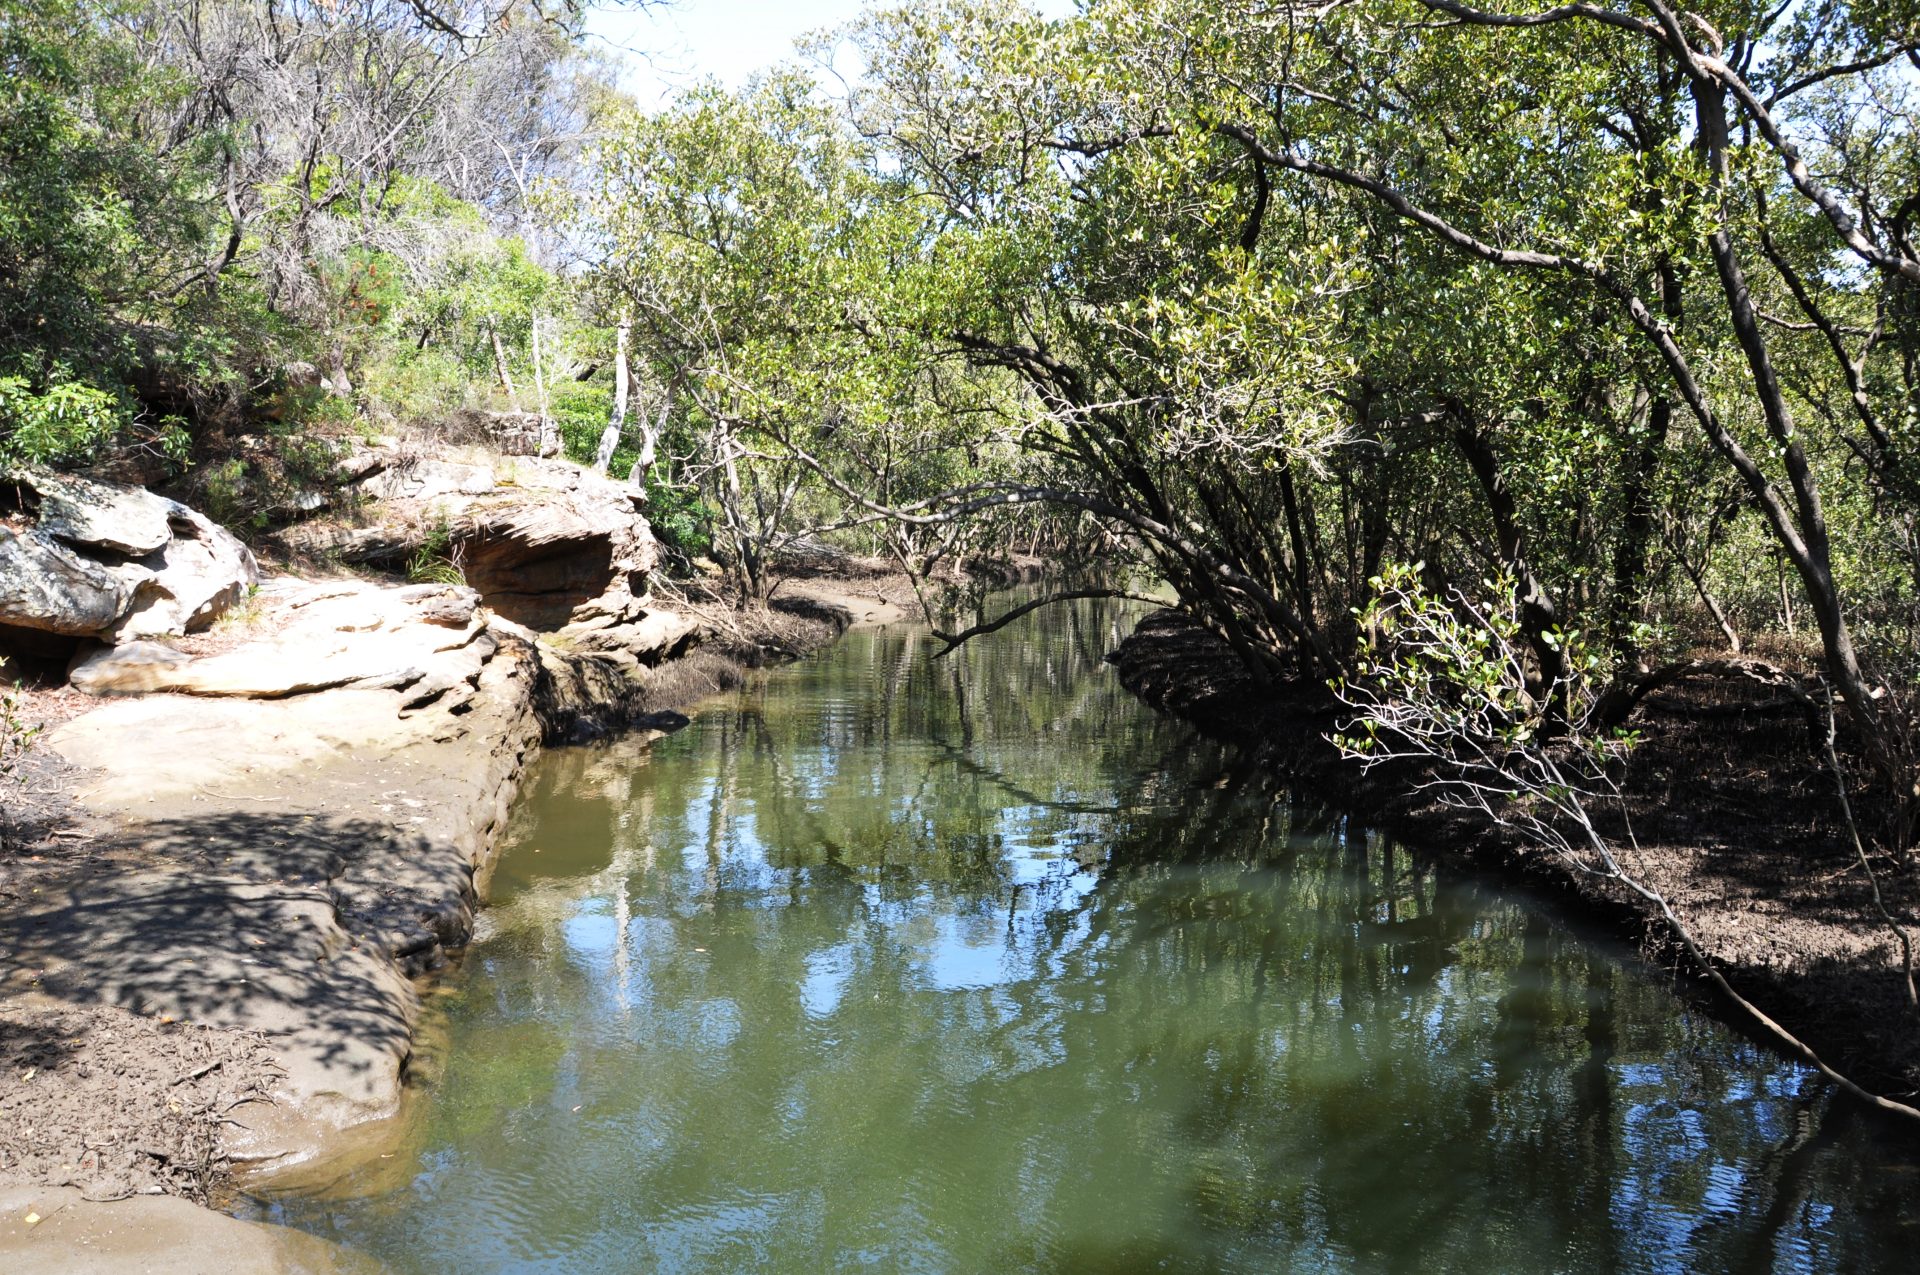 Buffalo Creek A Hidden Near Natural Sydney Ecosystem - Photograph By Mike Fernandes